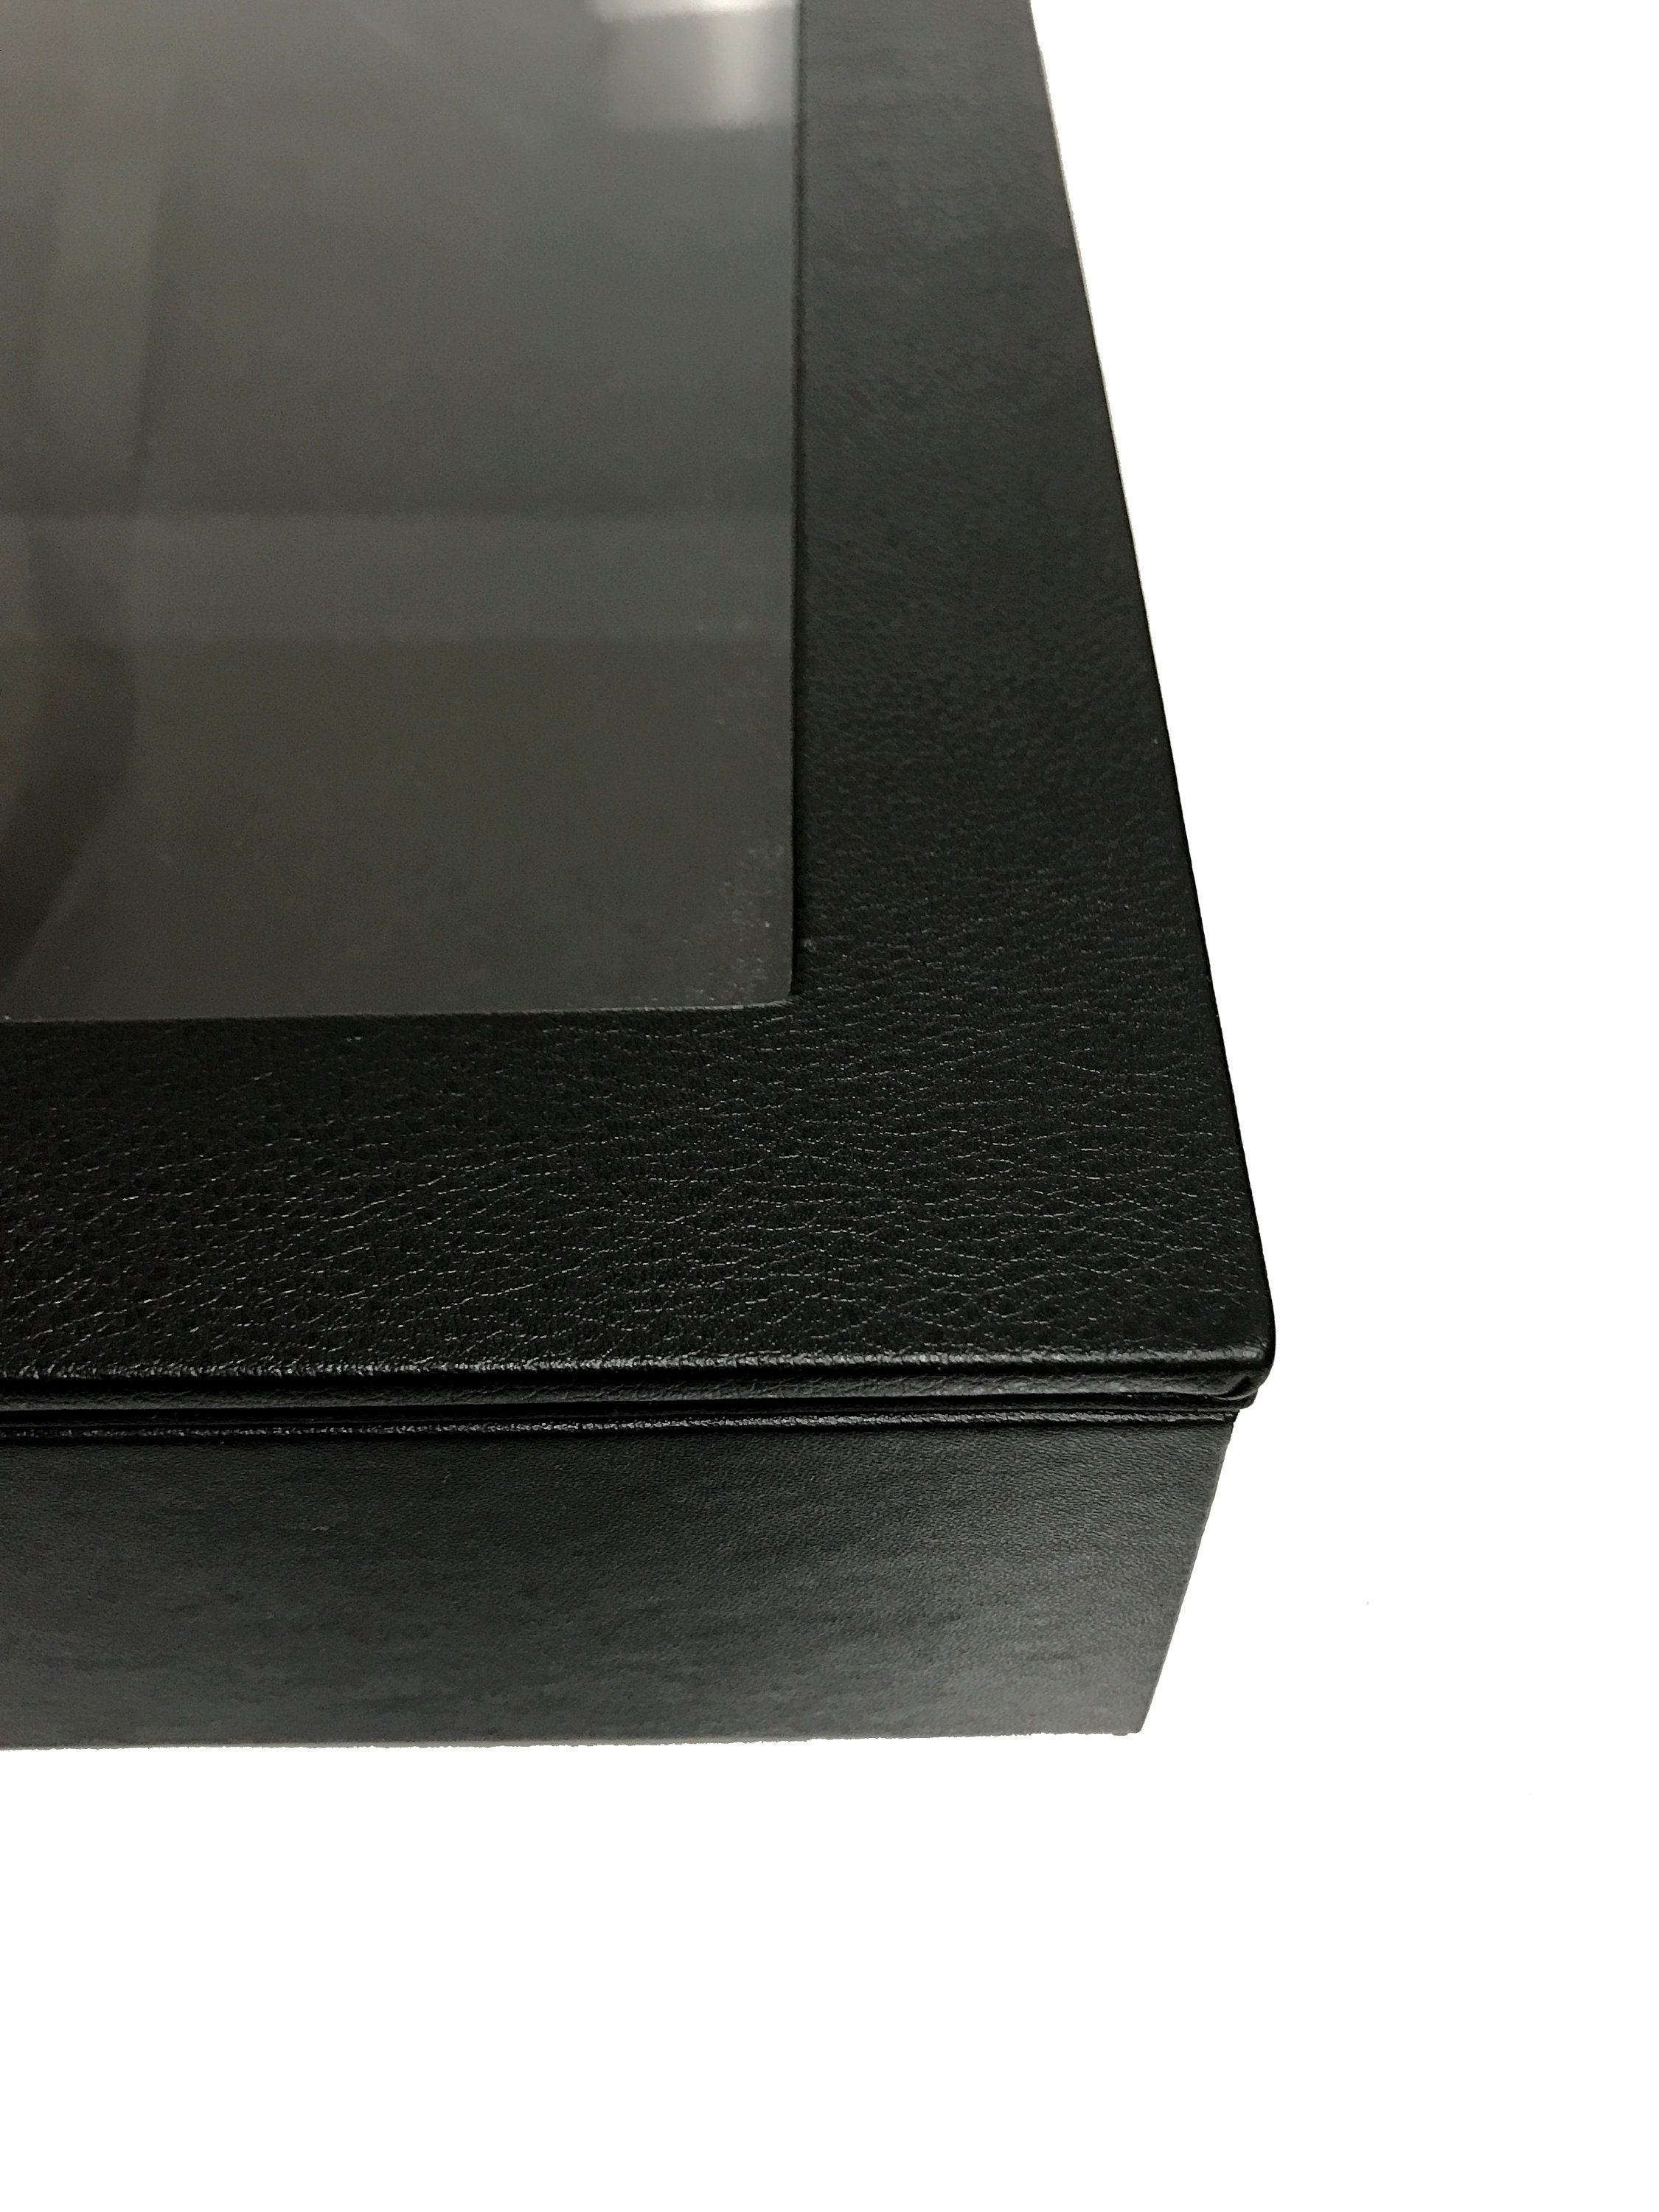 Clear Acrylic see Through Album Box black Leatherette - Etsy